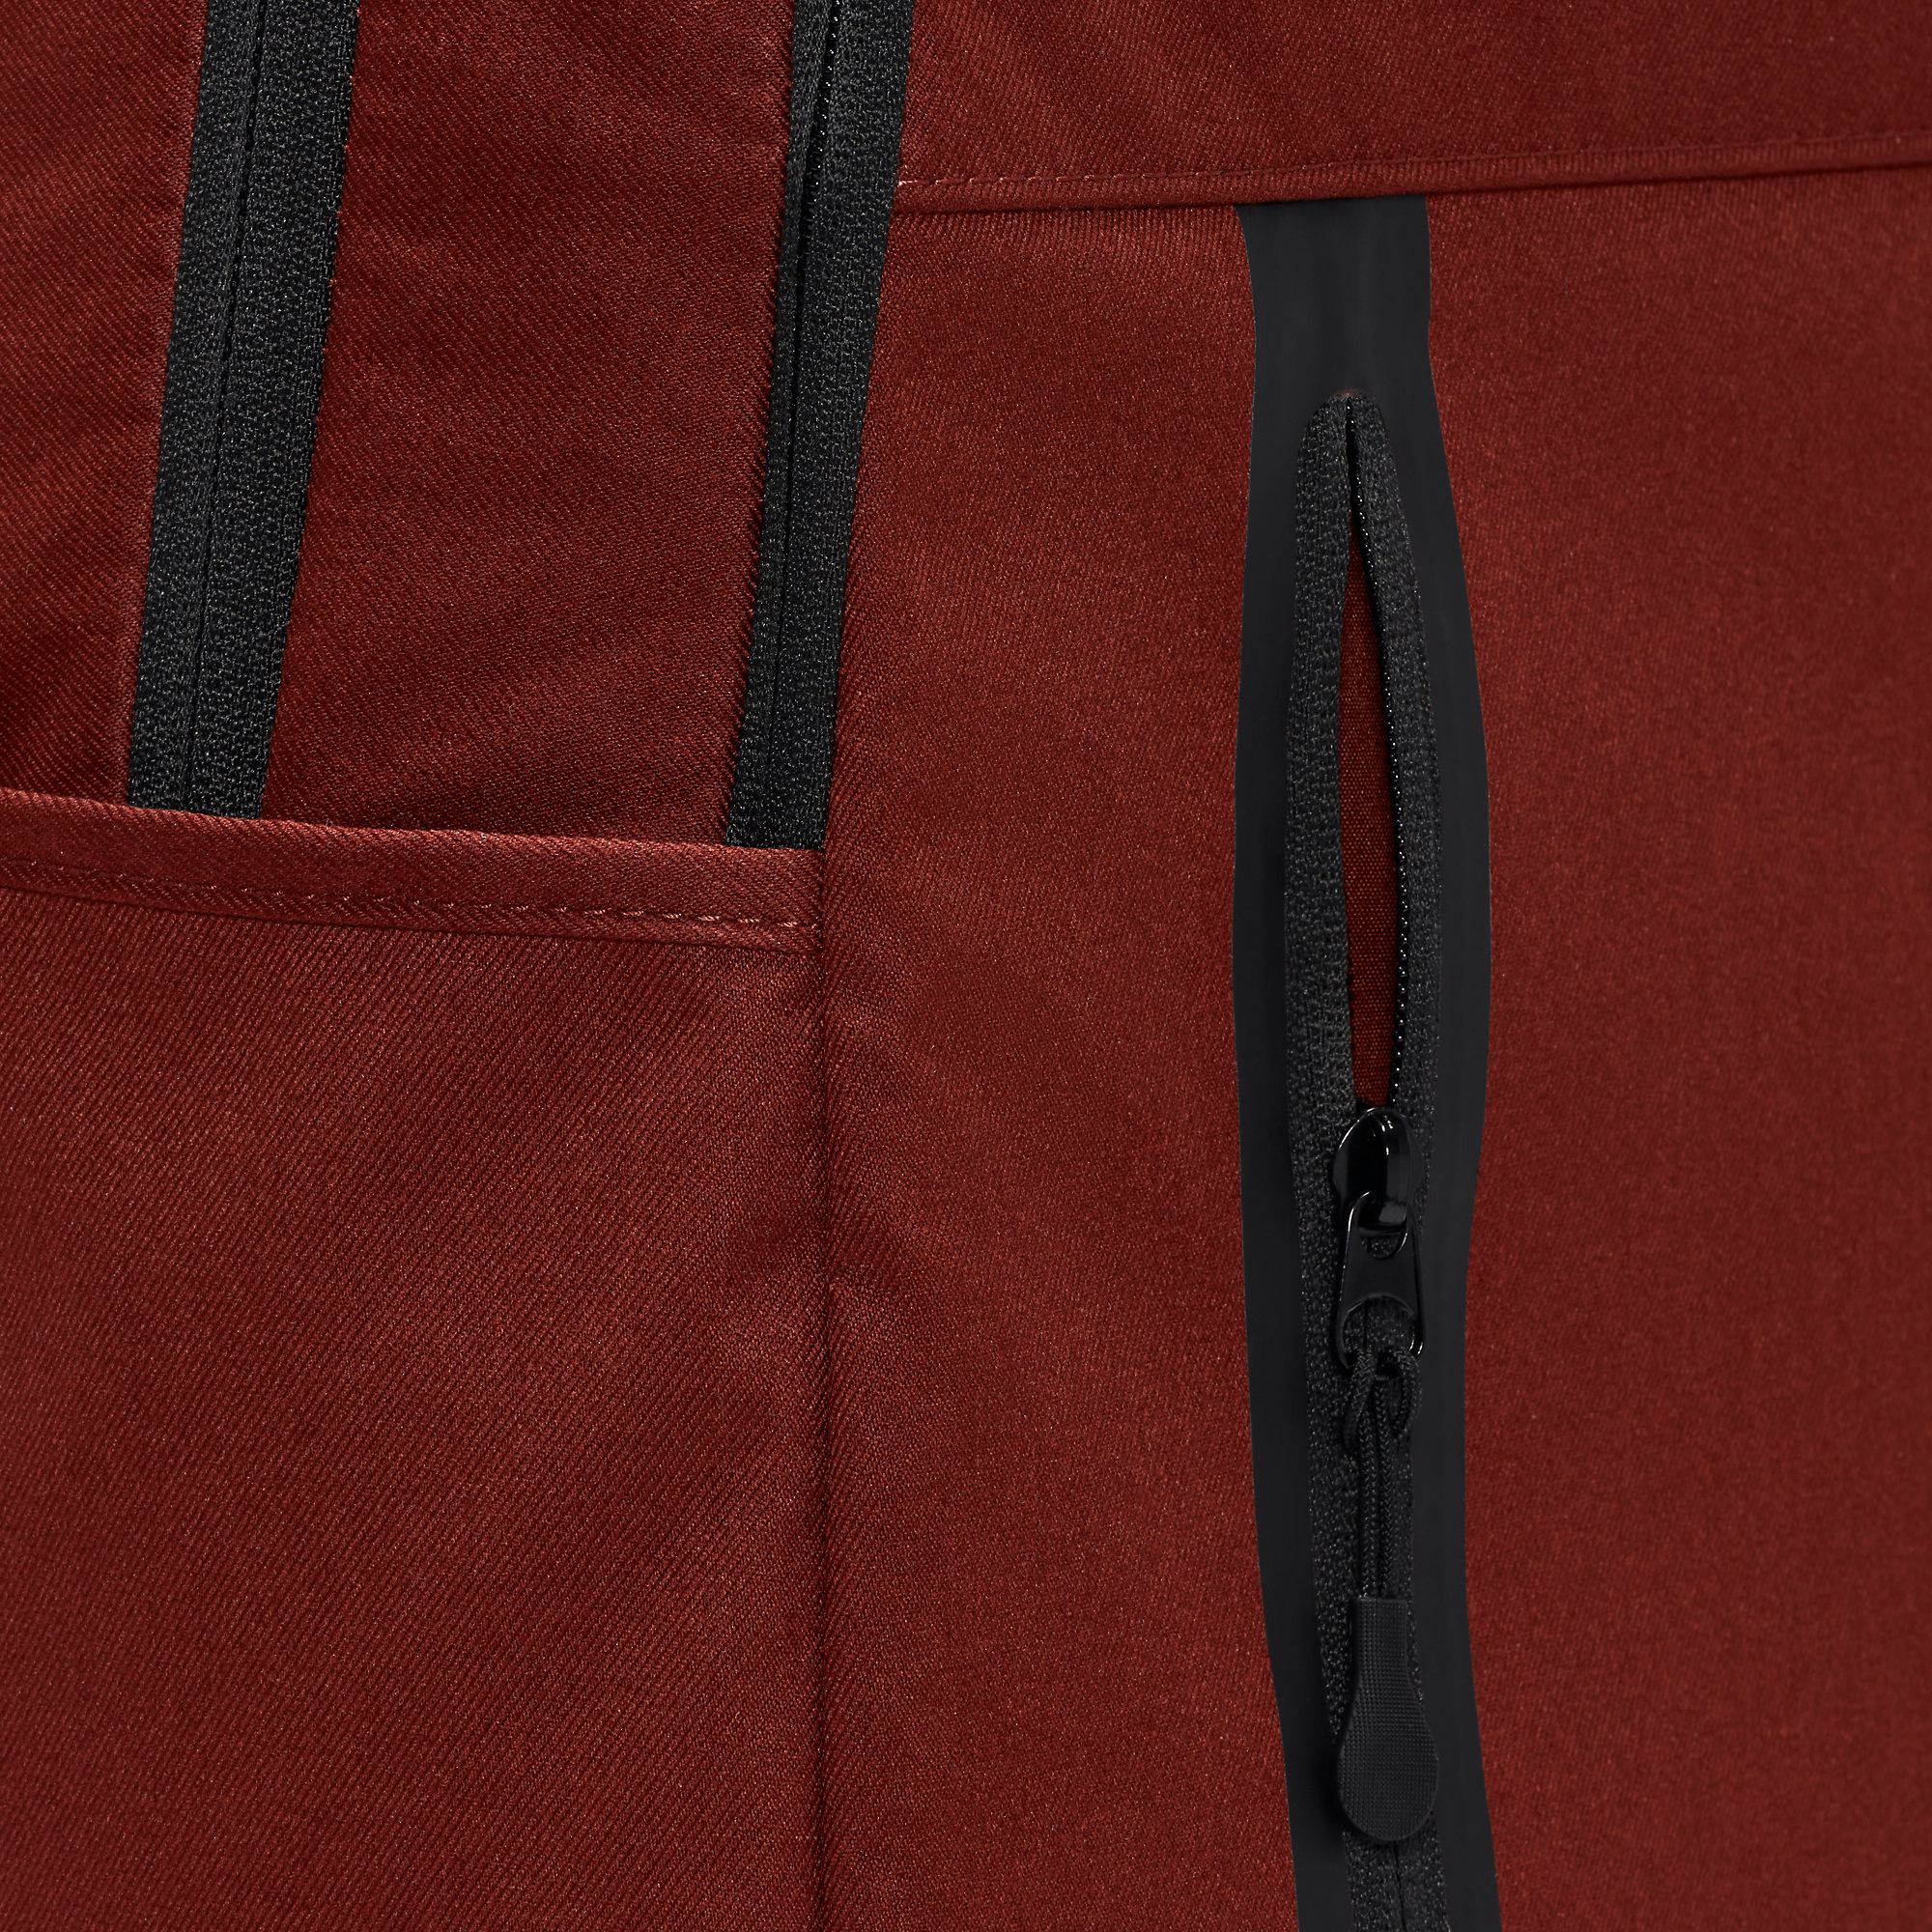  Nike Premium Backpack (21L) - Oxen Brown 